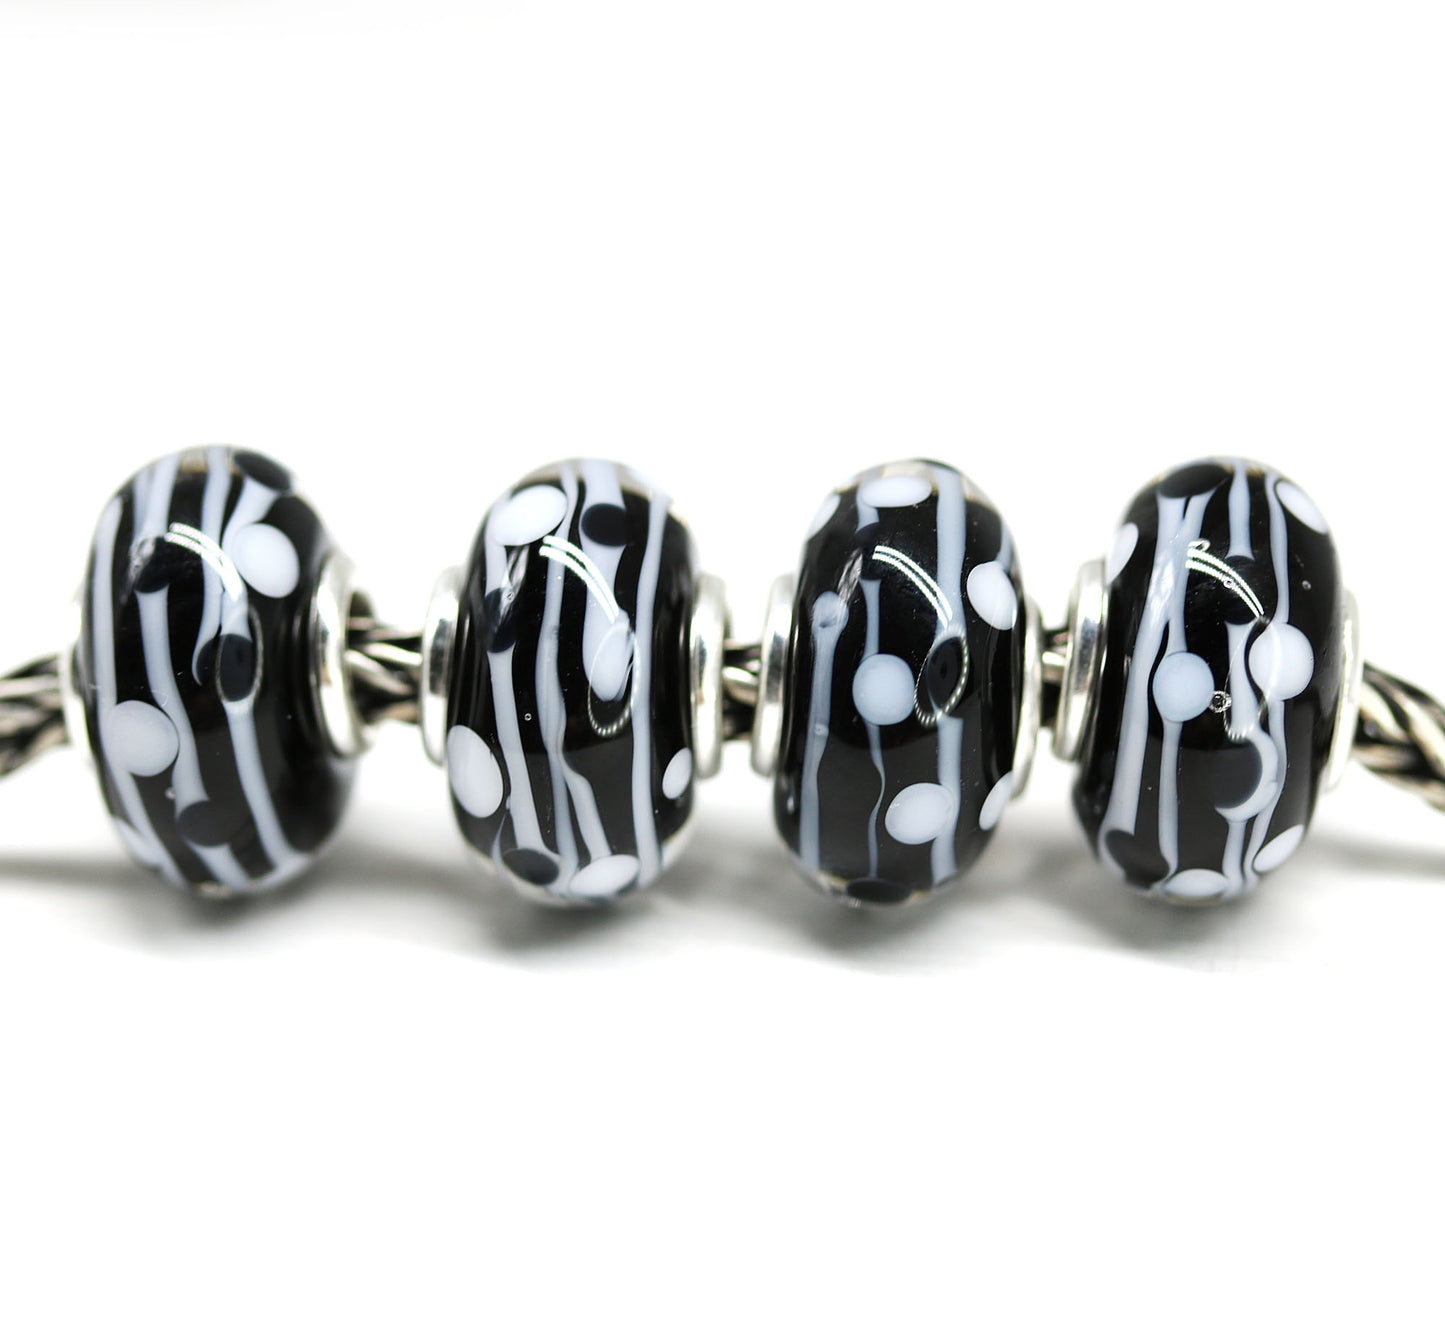 Pandora style bracelet beads black and white dots Murano glass bead